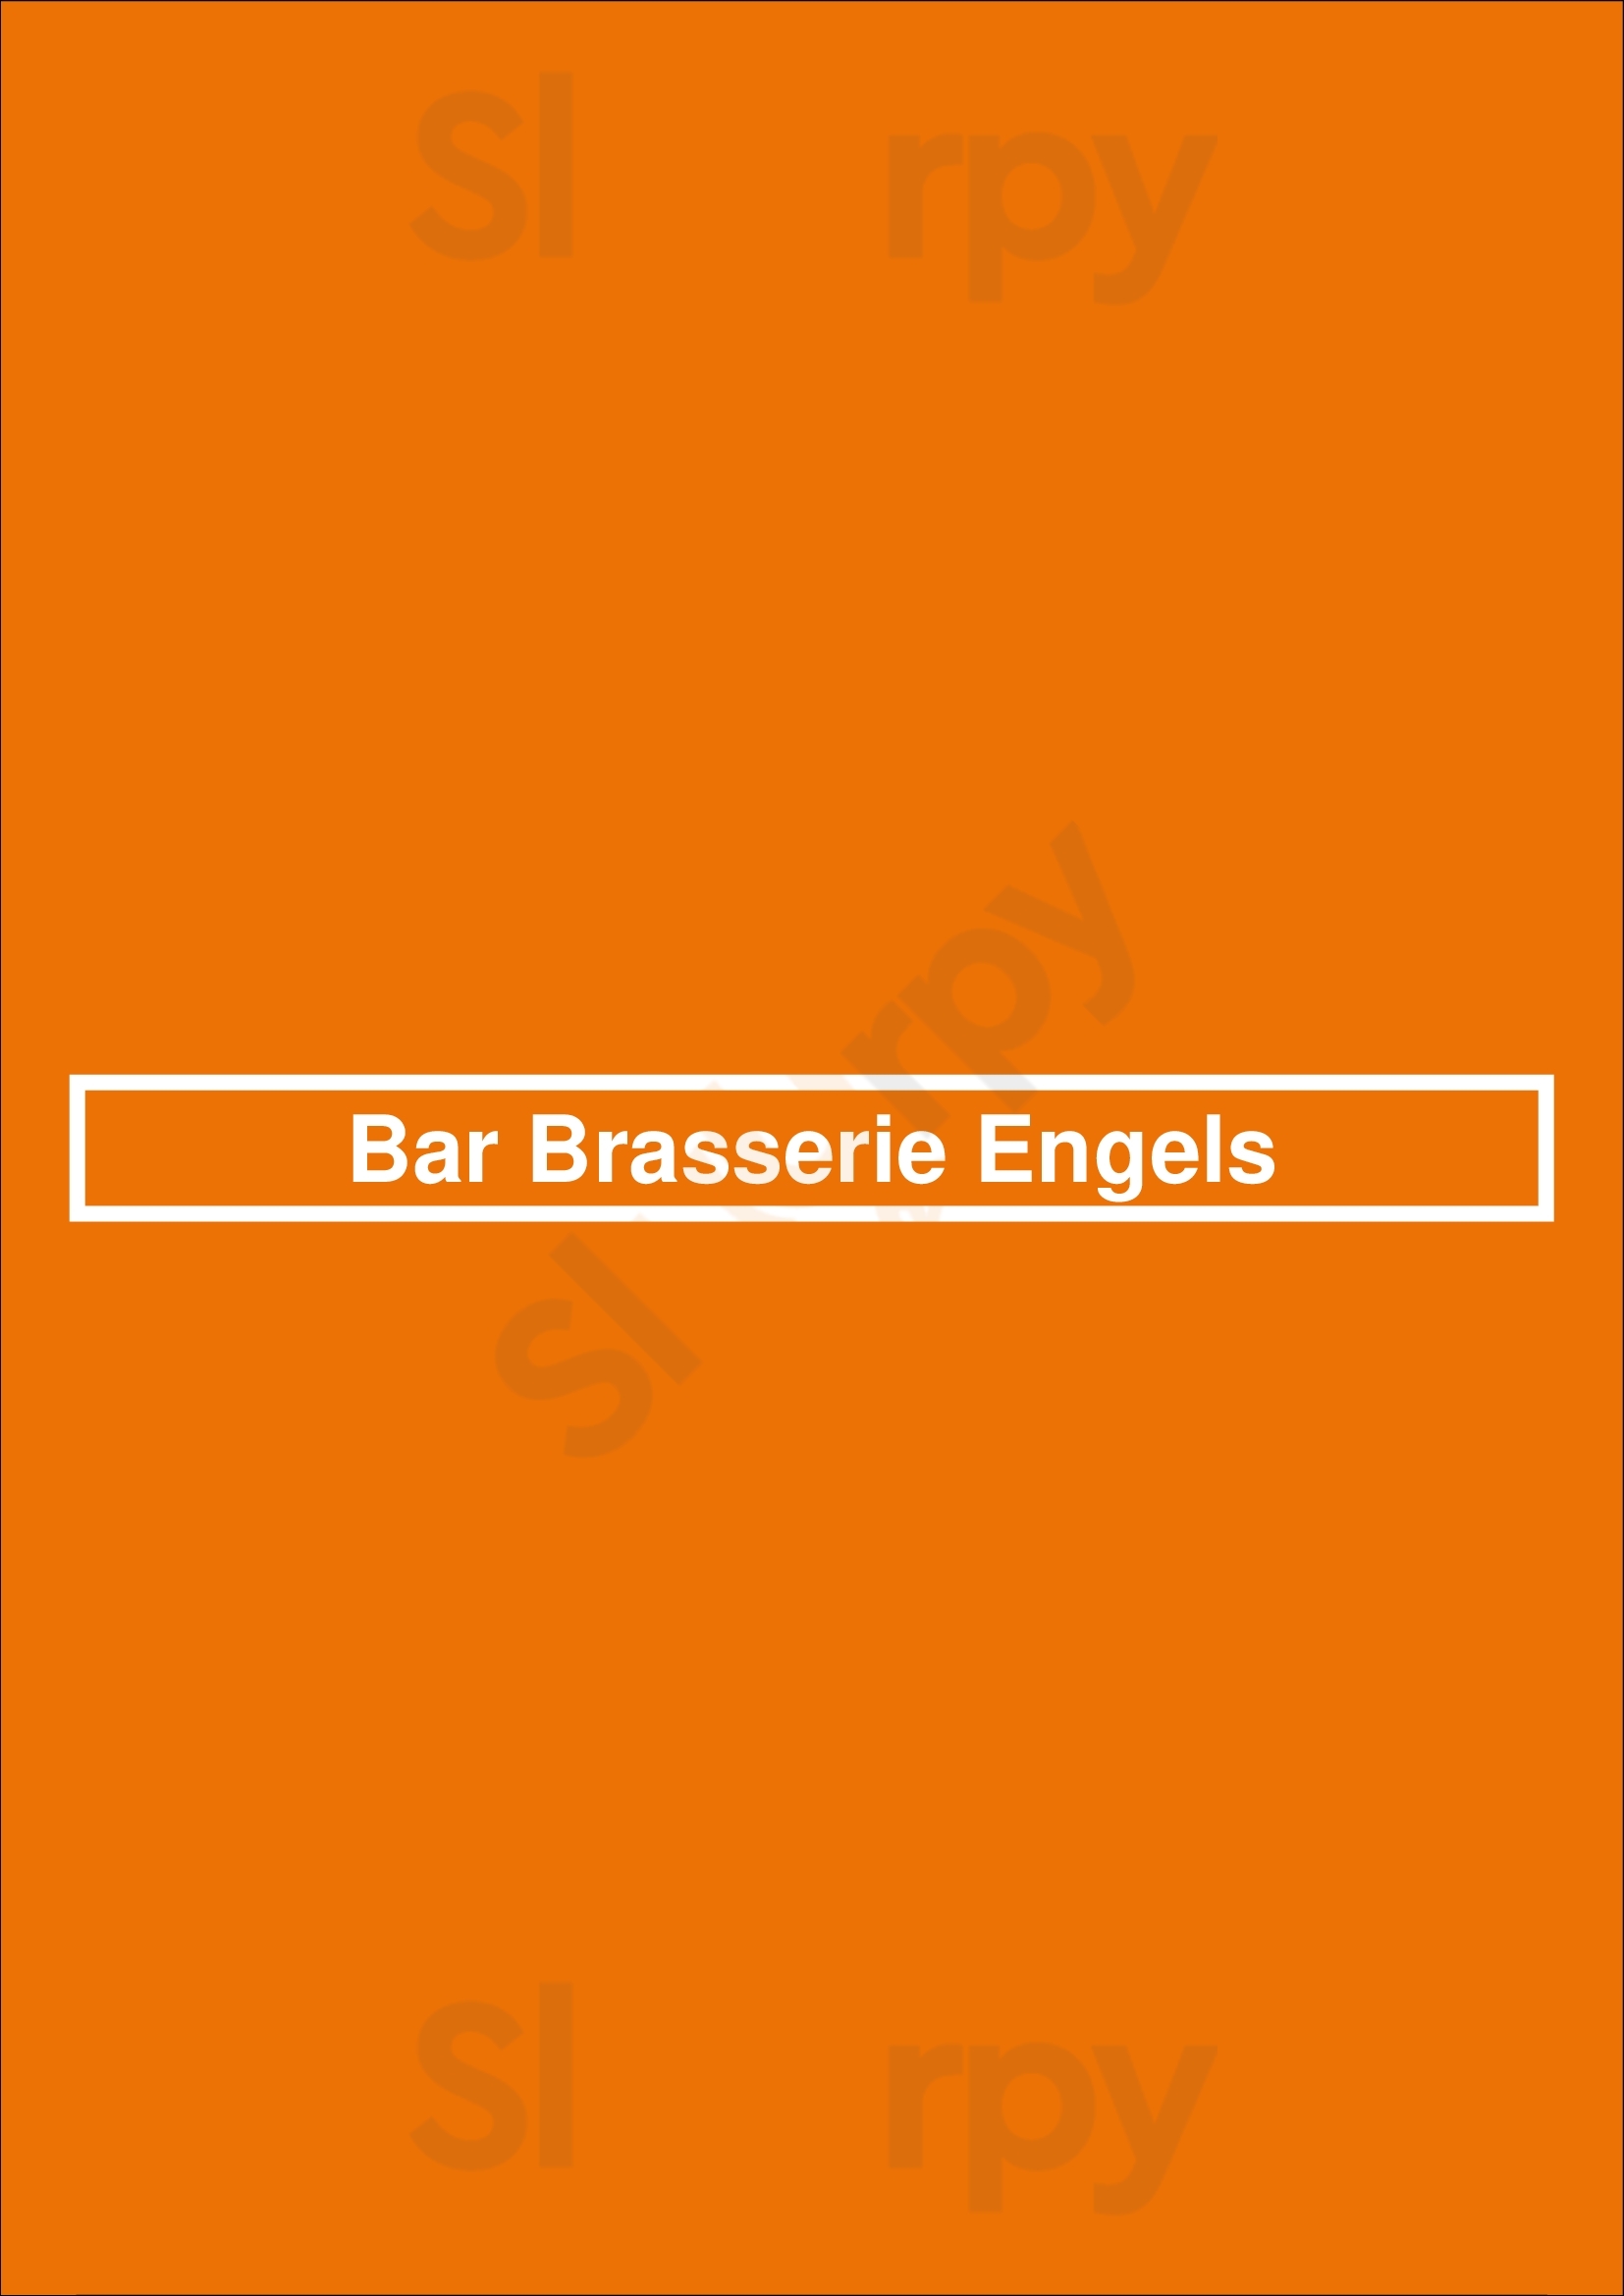 Bar Brasserie Engels Rotterdam Menu - 1